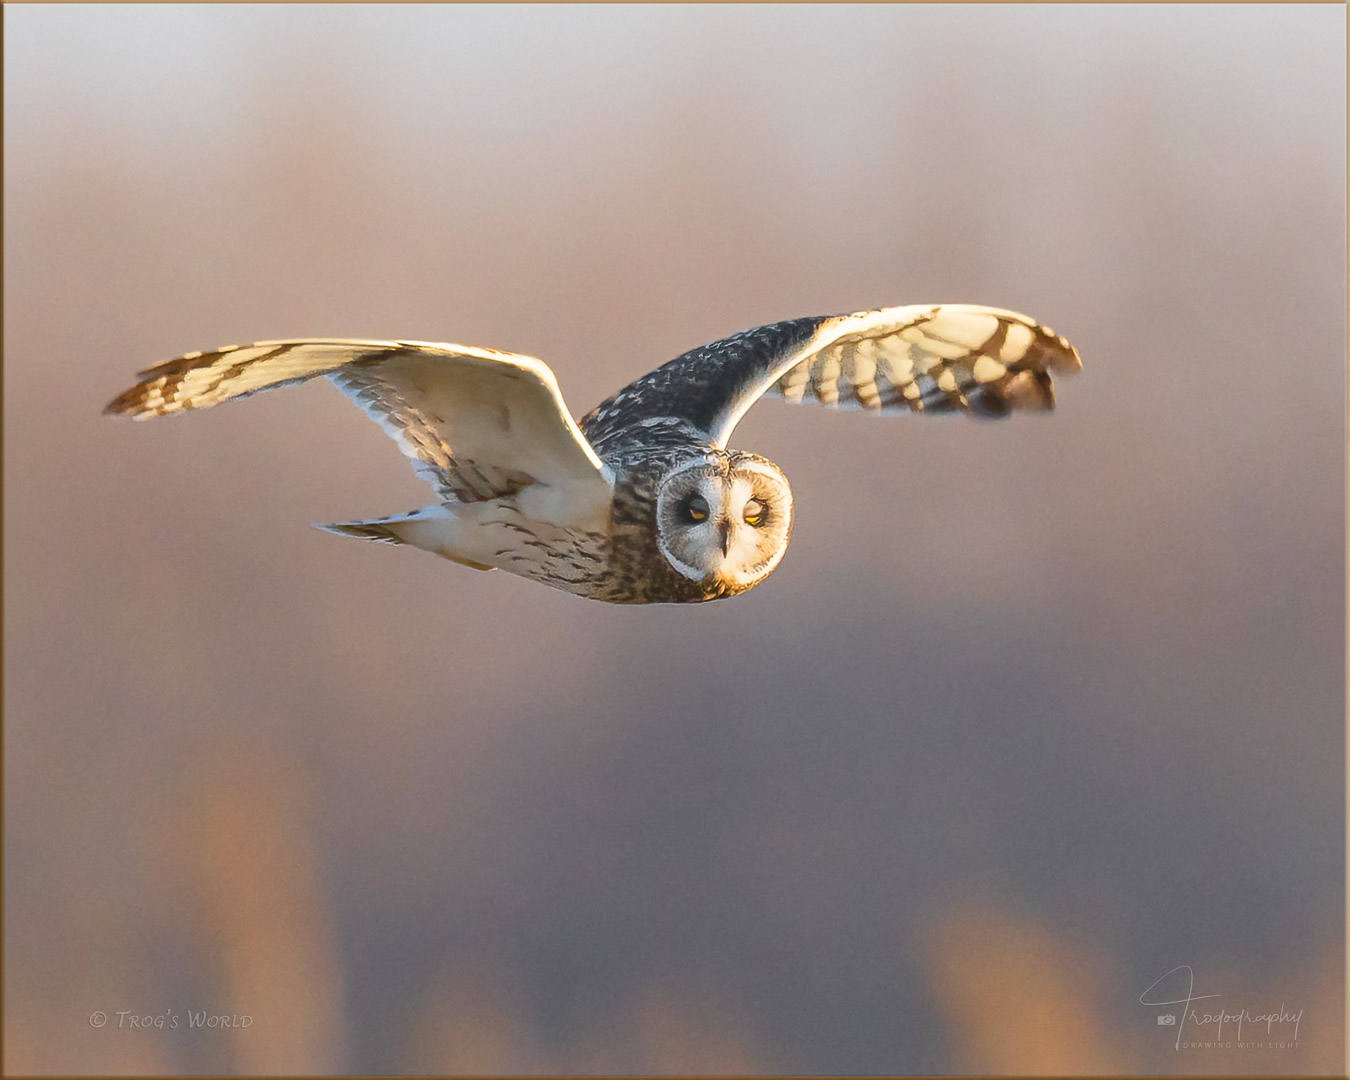 Short-eared Owl in flight during sunset